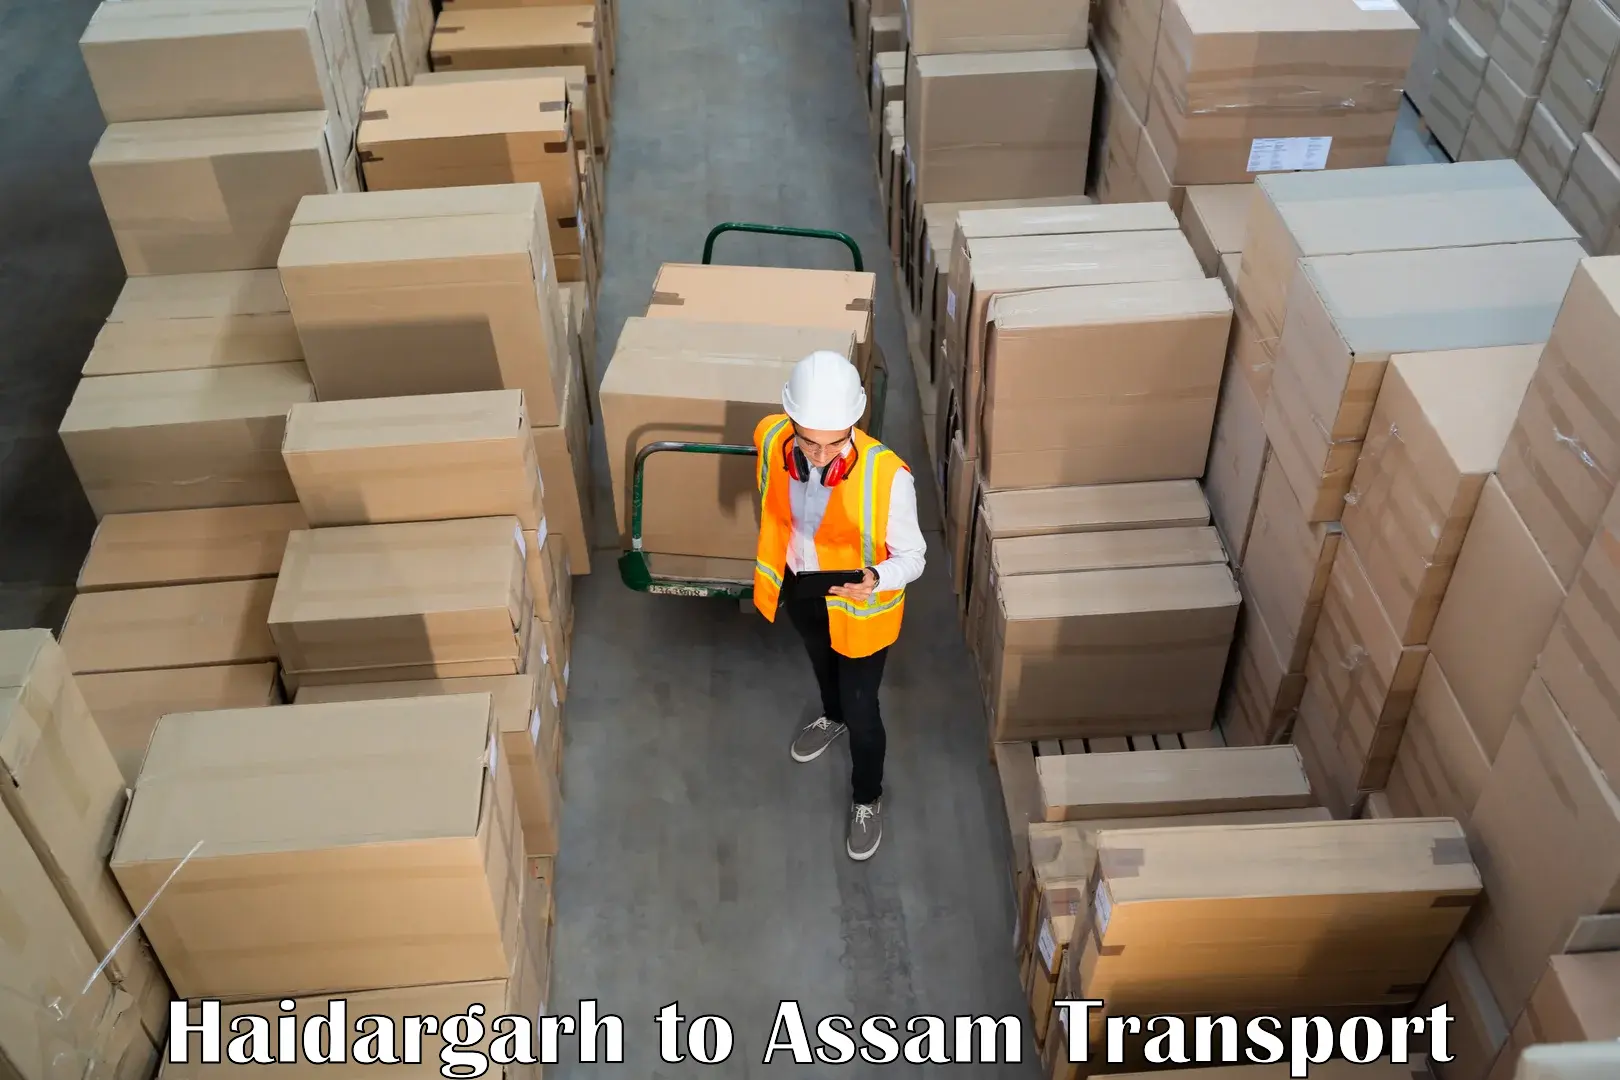 Shipping partner Haidargarh to Bhaga